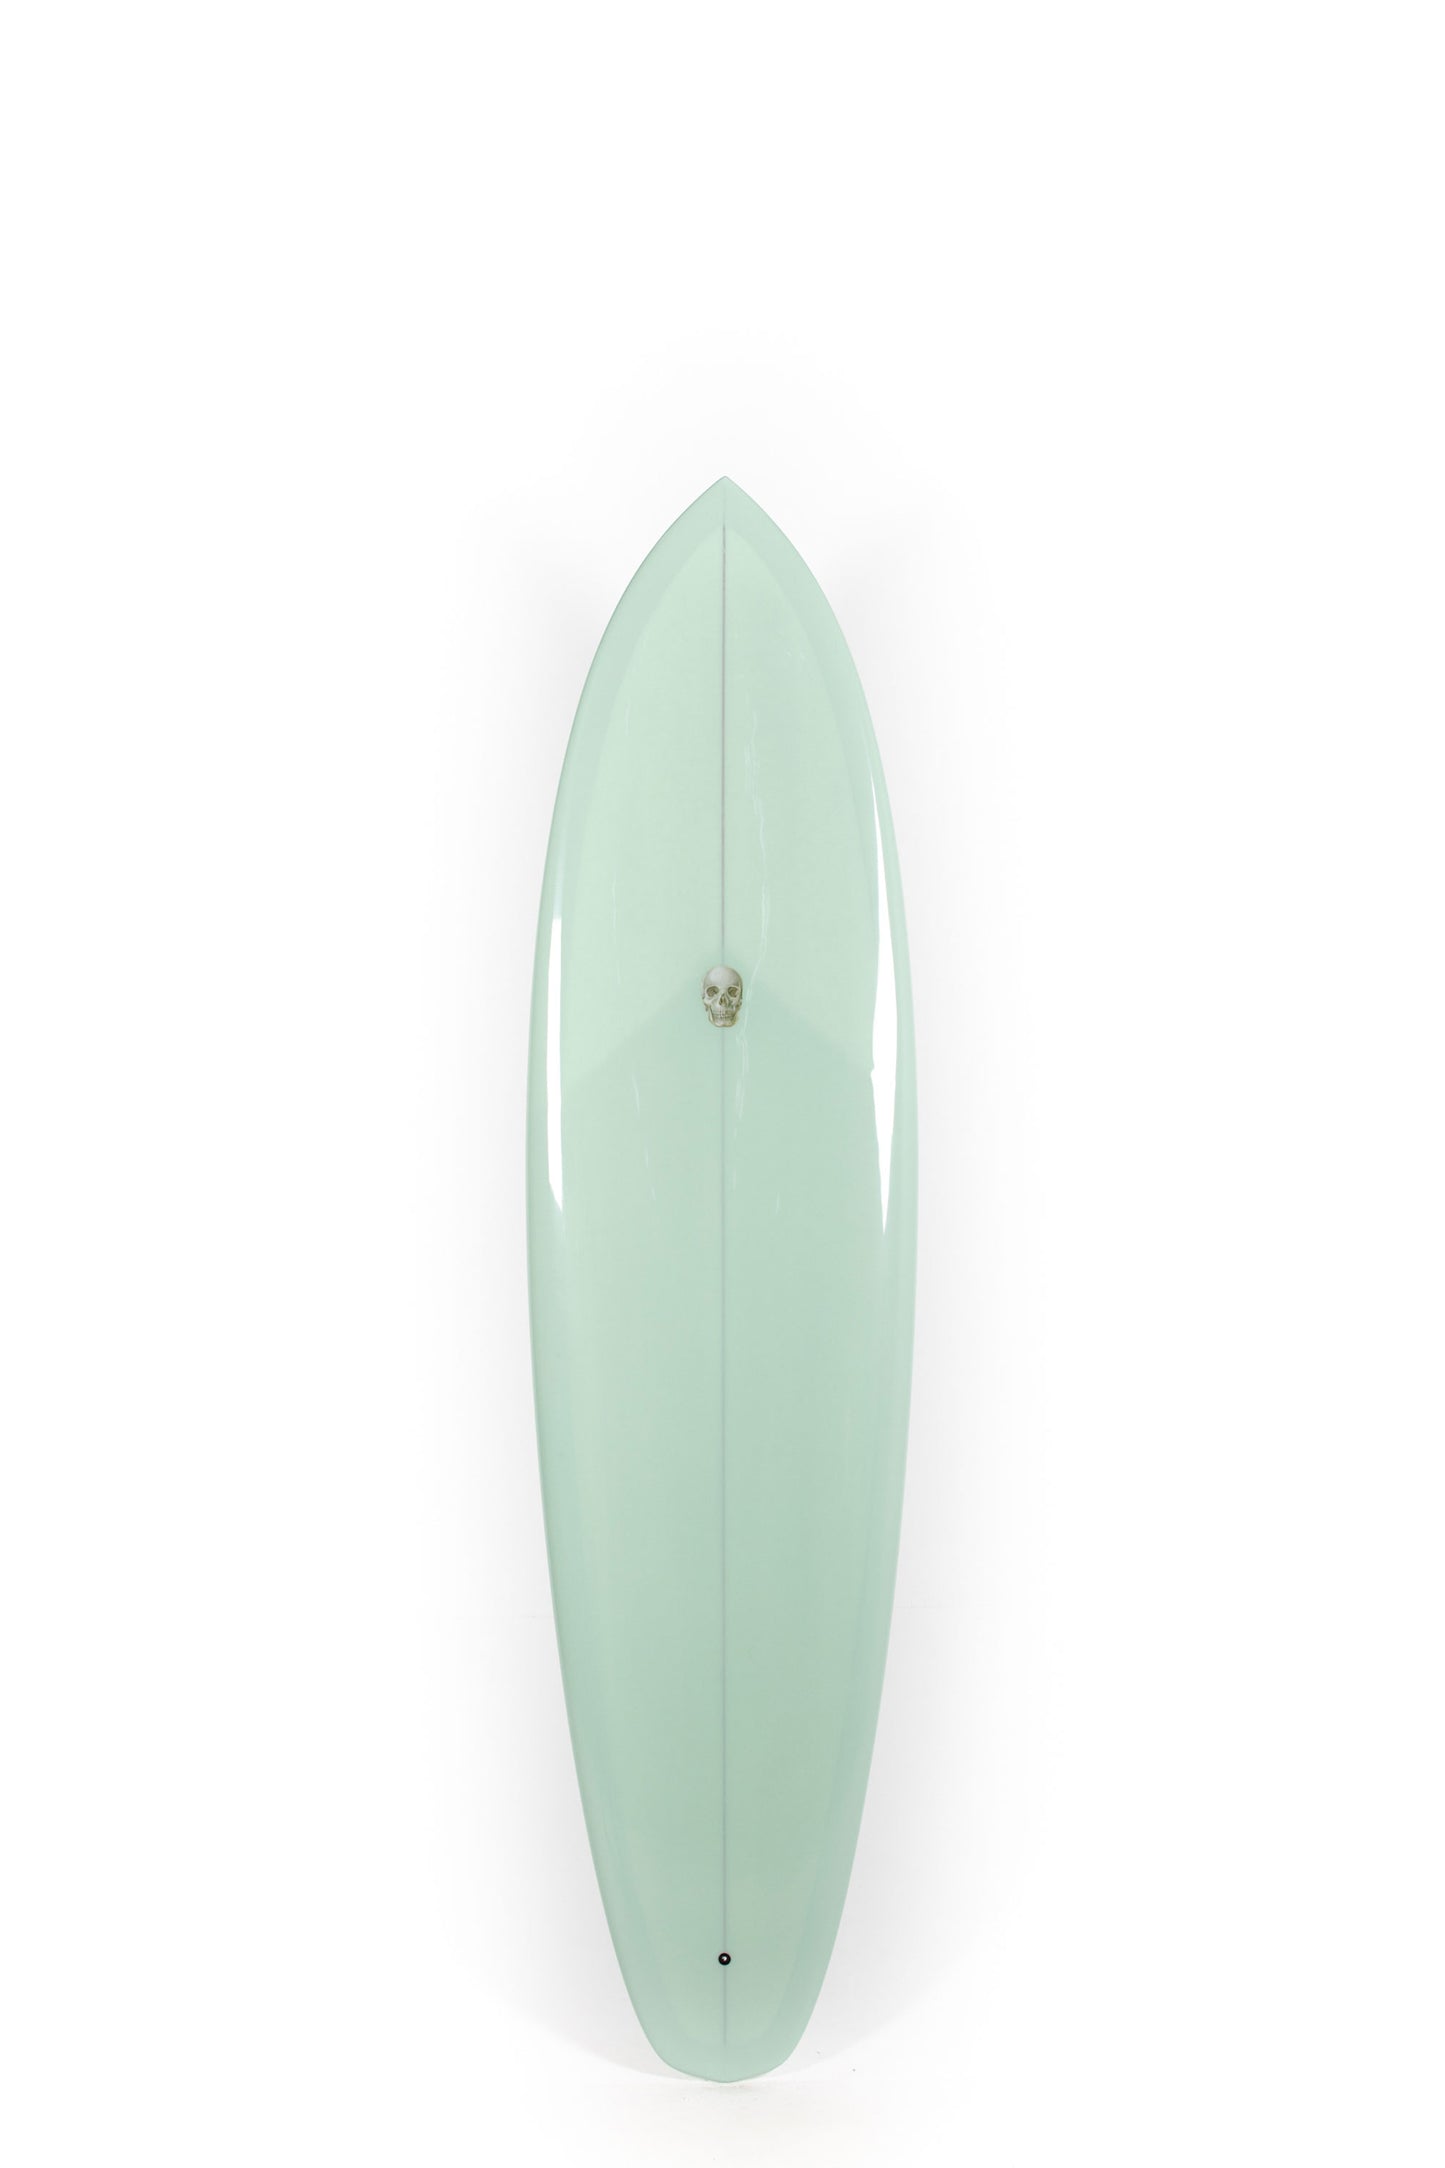 Pukas Surf Shop - Christenson Surfboards - ULTRA TRACKER - 7'2" x 21 1/4 x 2 7/8 - CX04344